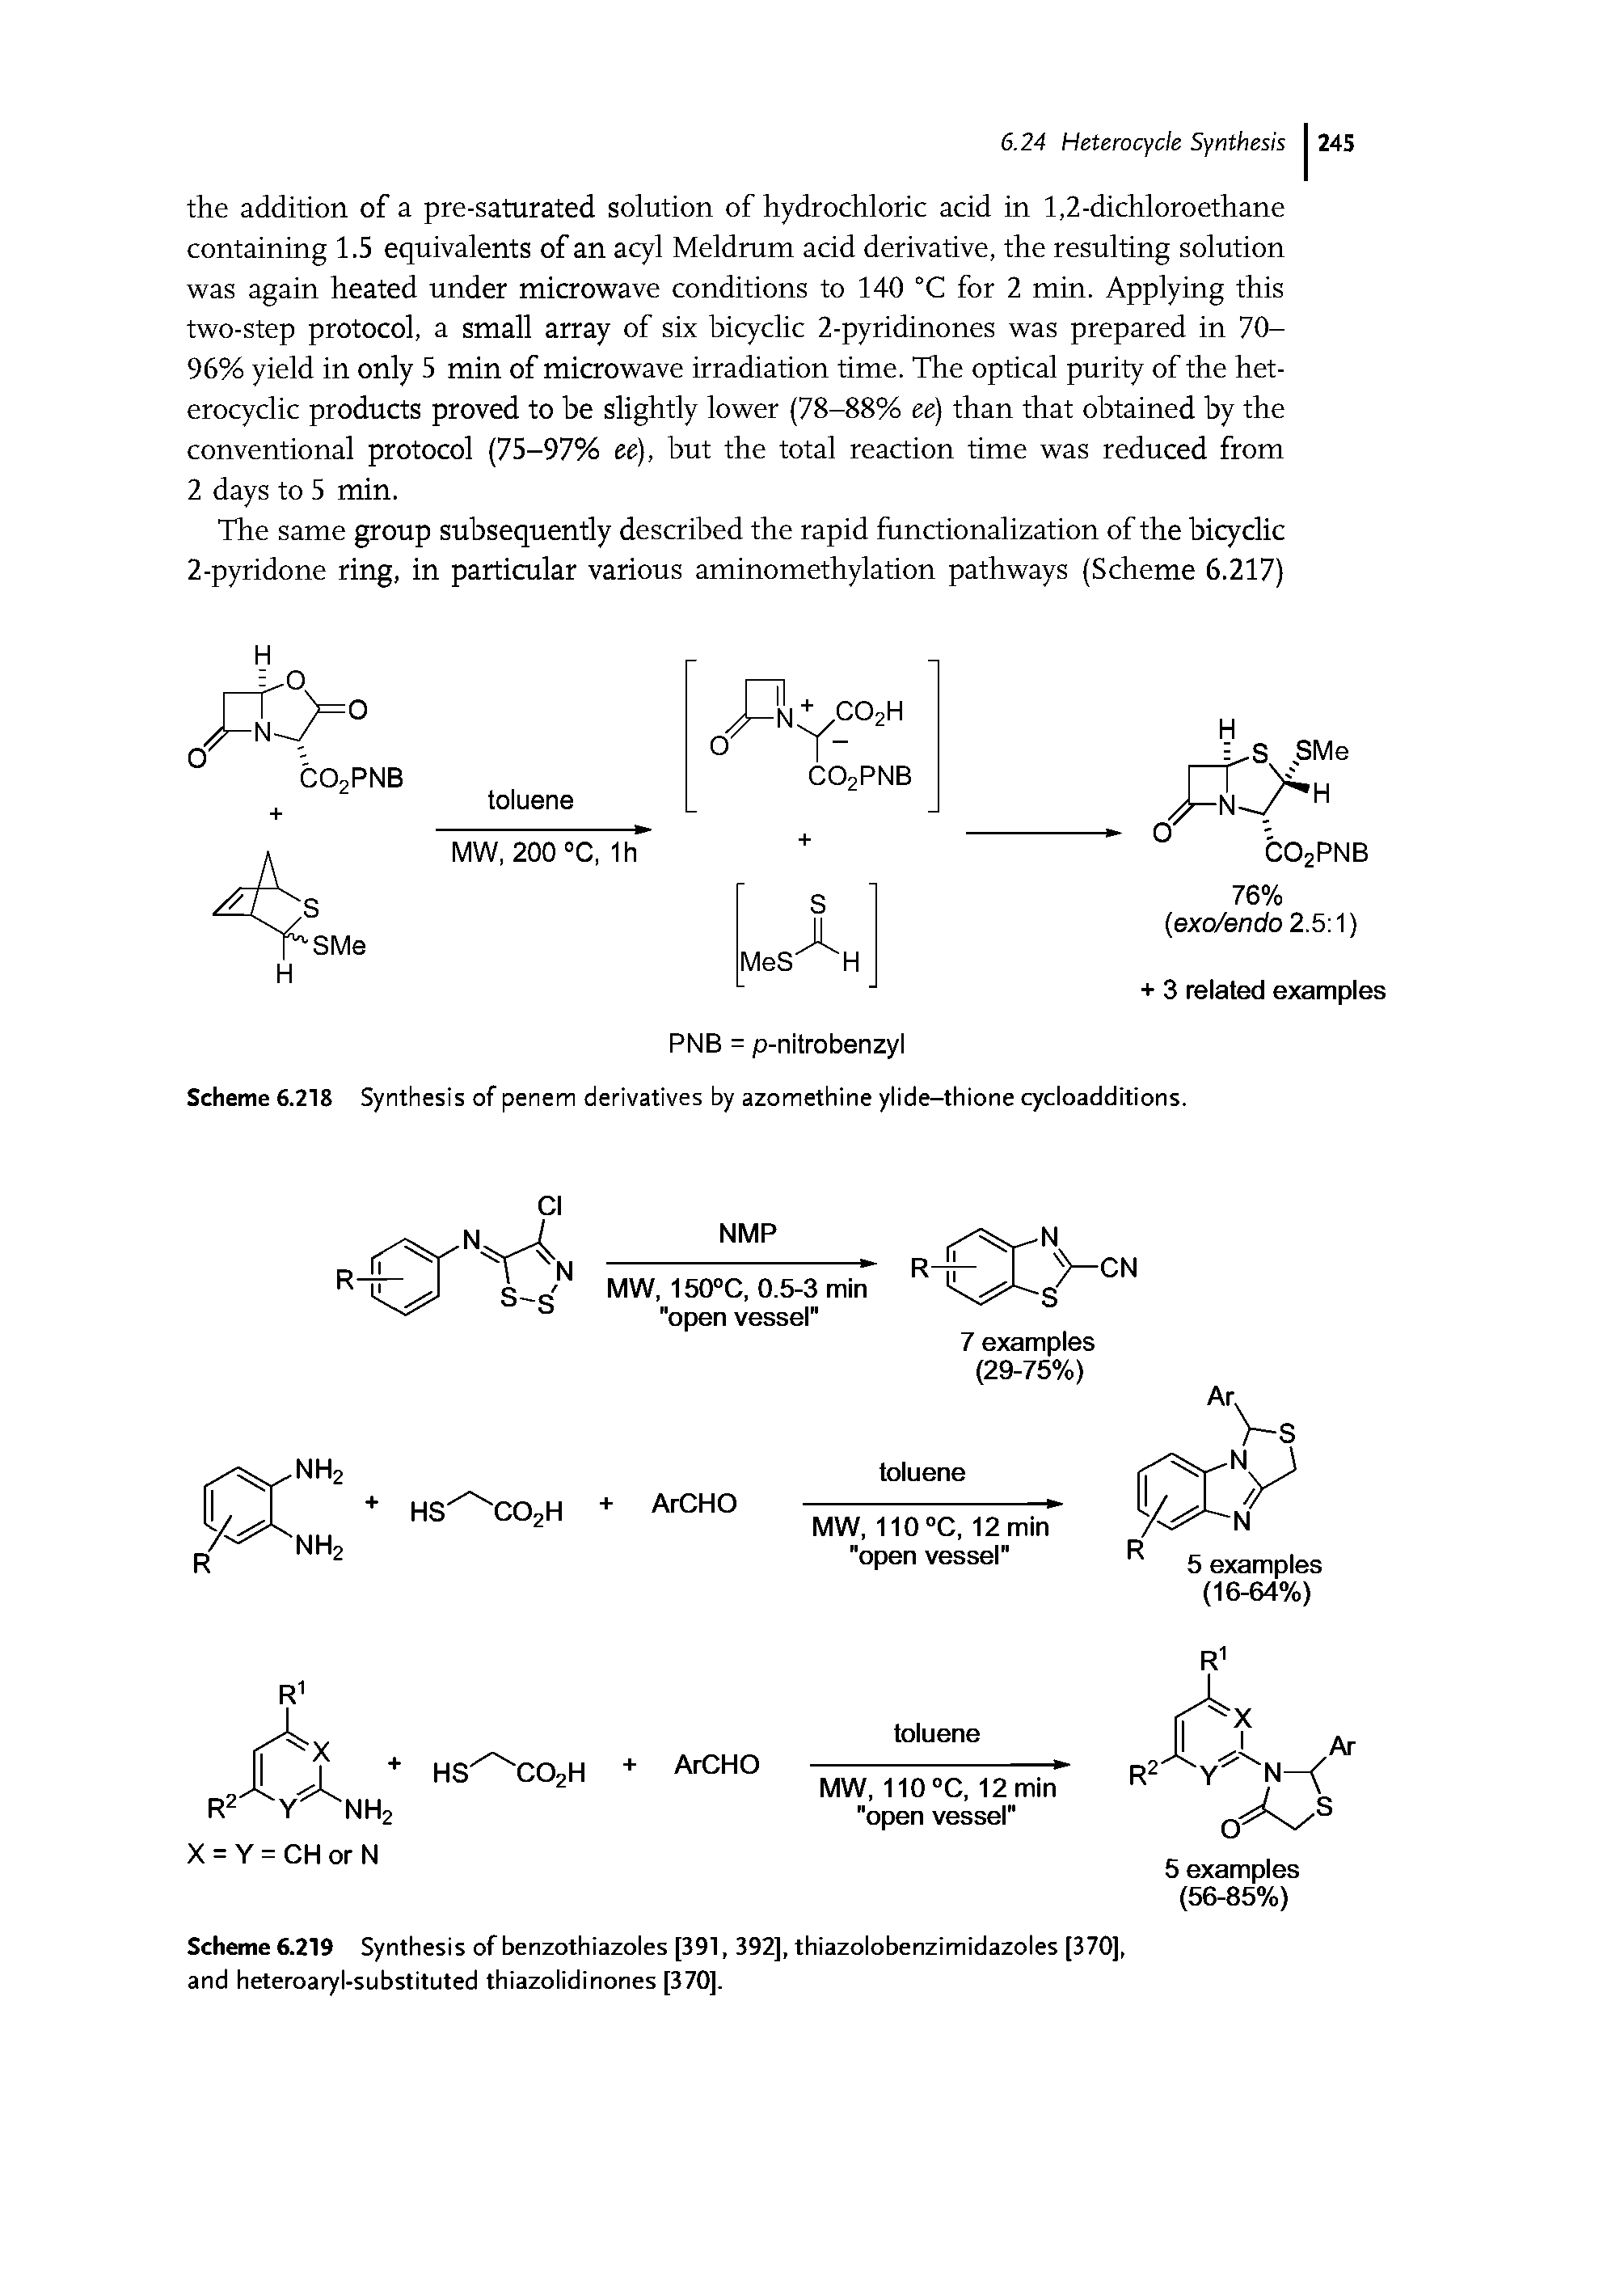 Scheme 6.219 Synthesis of benzothiazoles [391, 392], thiazolobenzimidazoles [370], and heteroaryl-substituted thiazolidinones [370],...